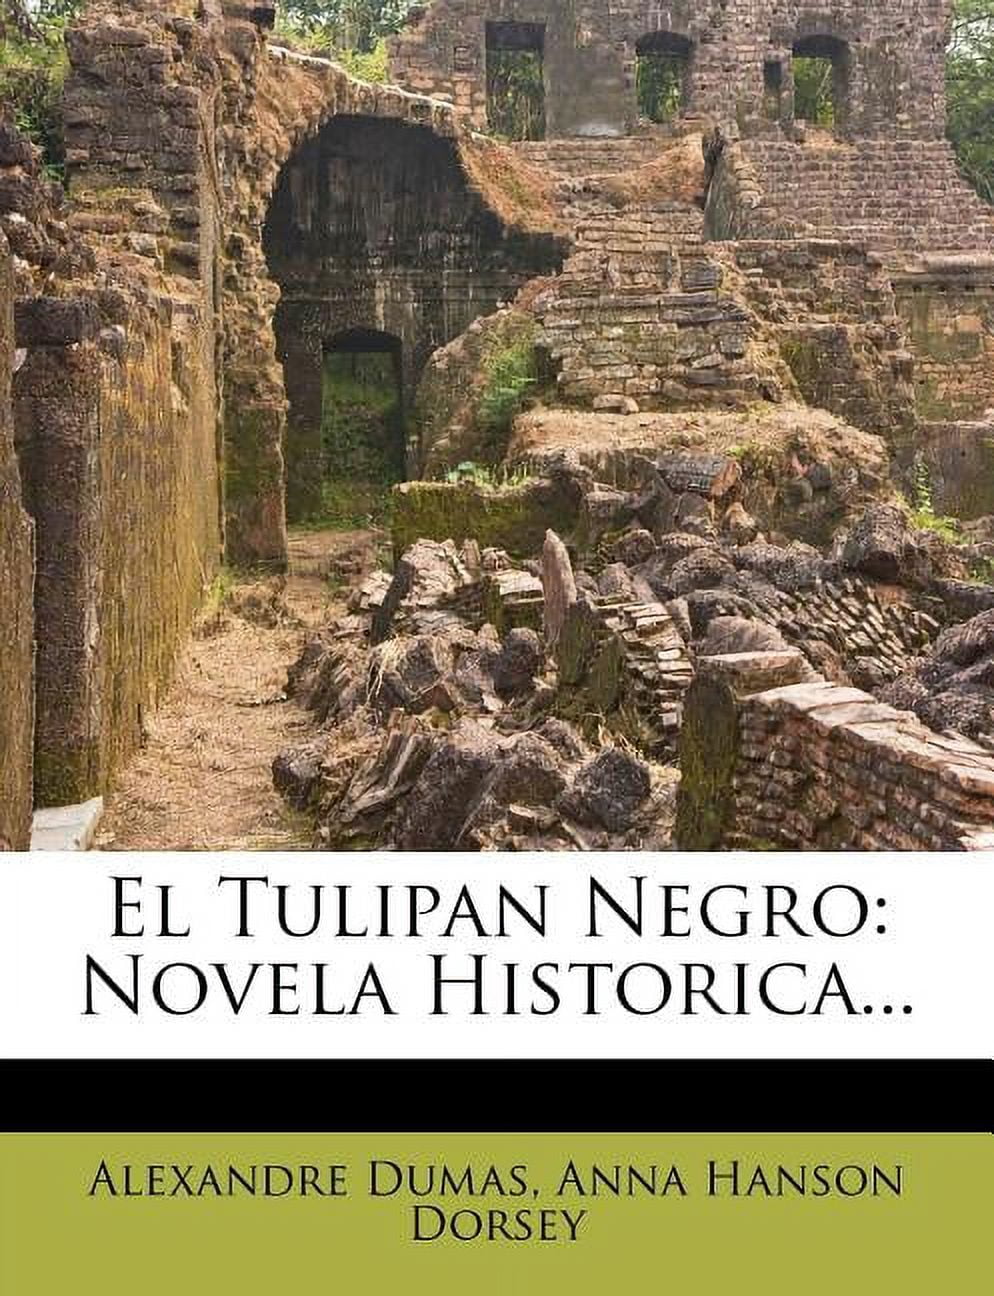 El Tulipan Negro : Novela Historica (Paperback)